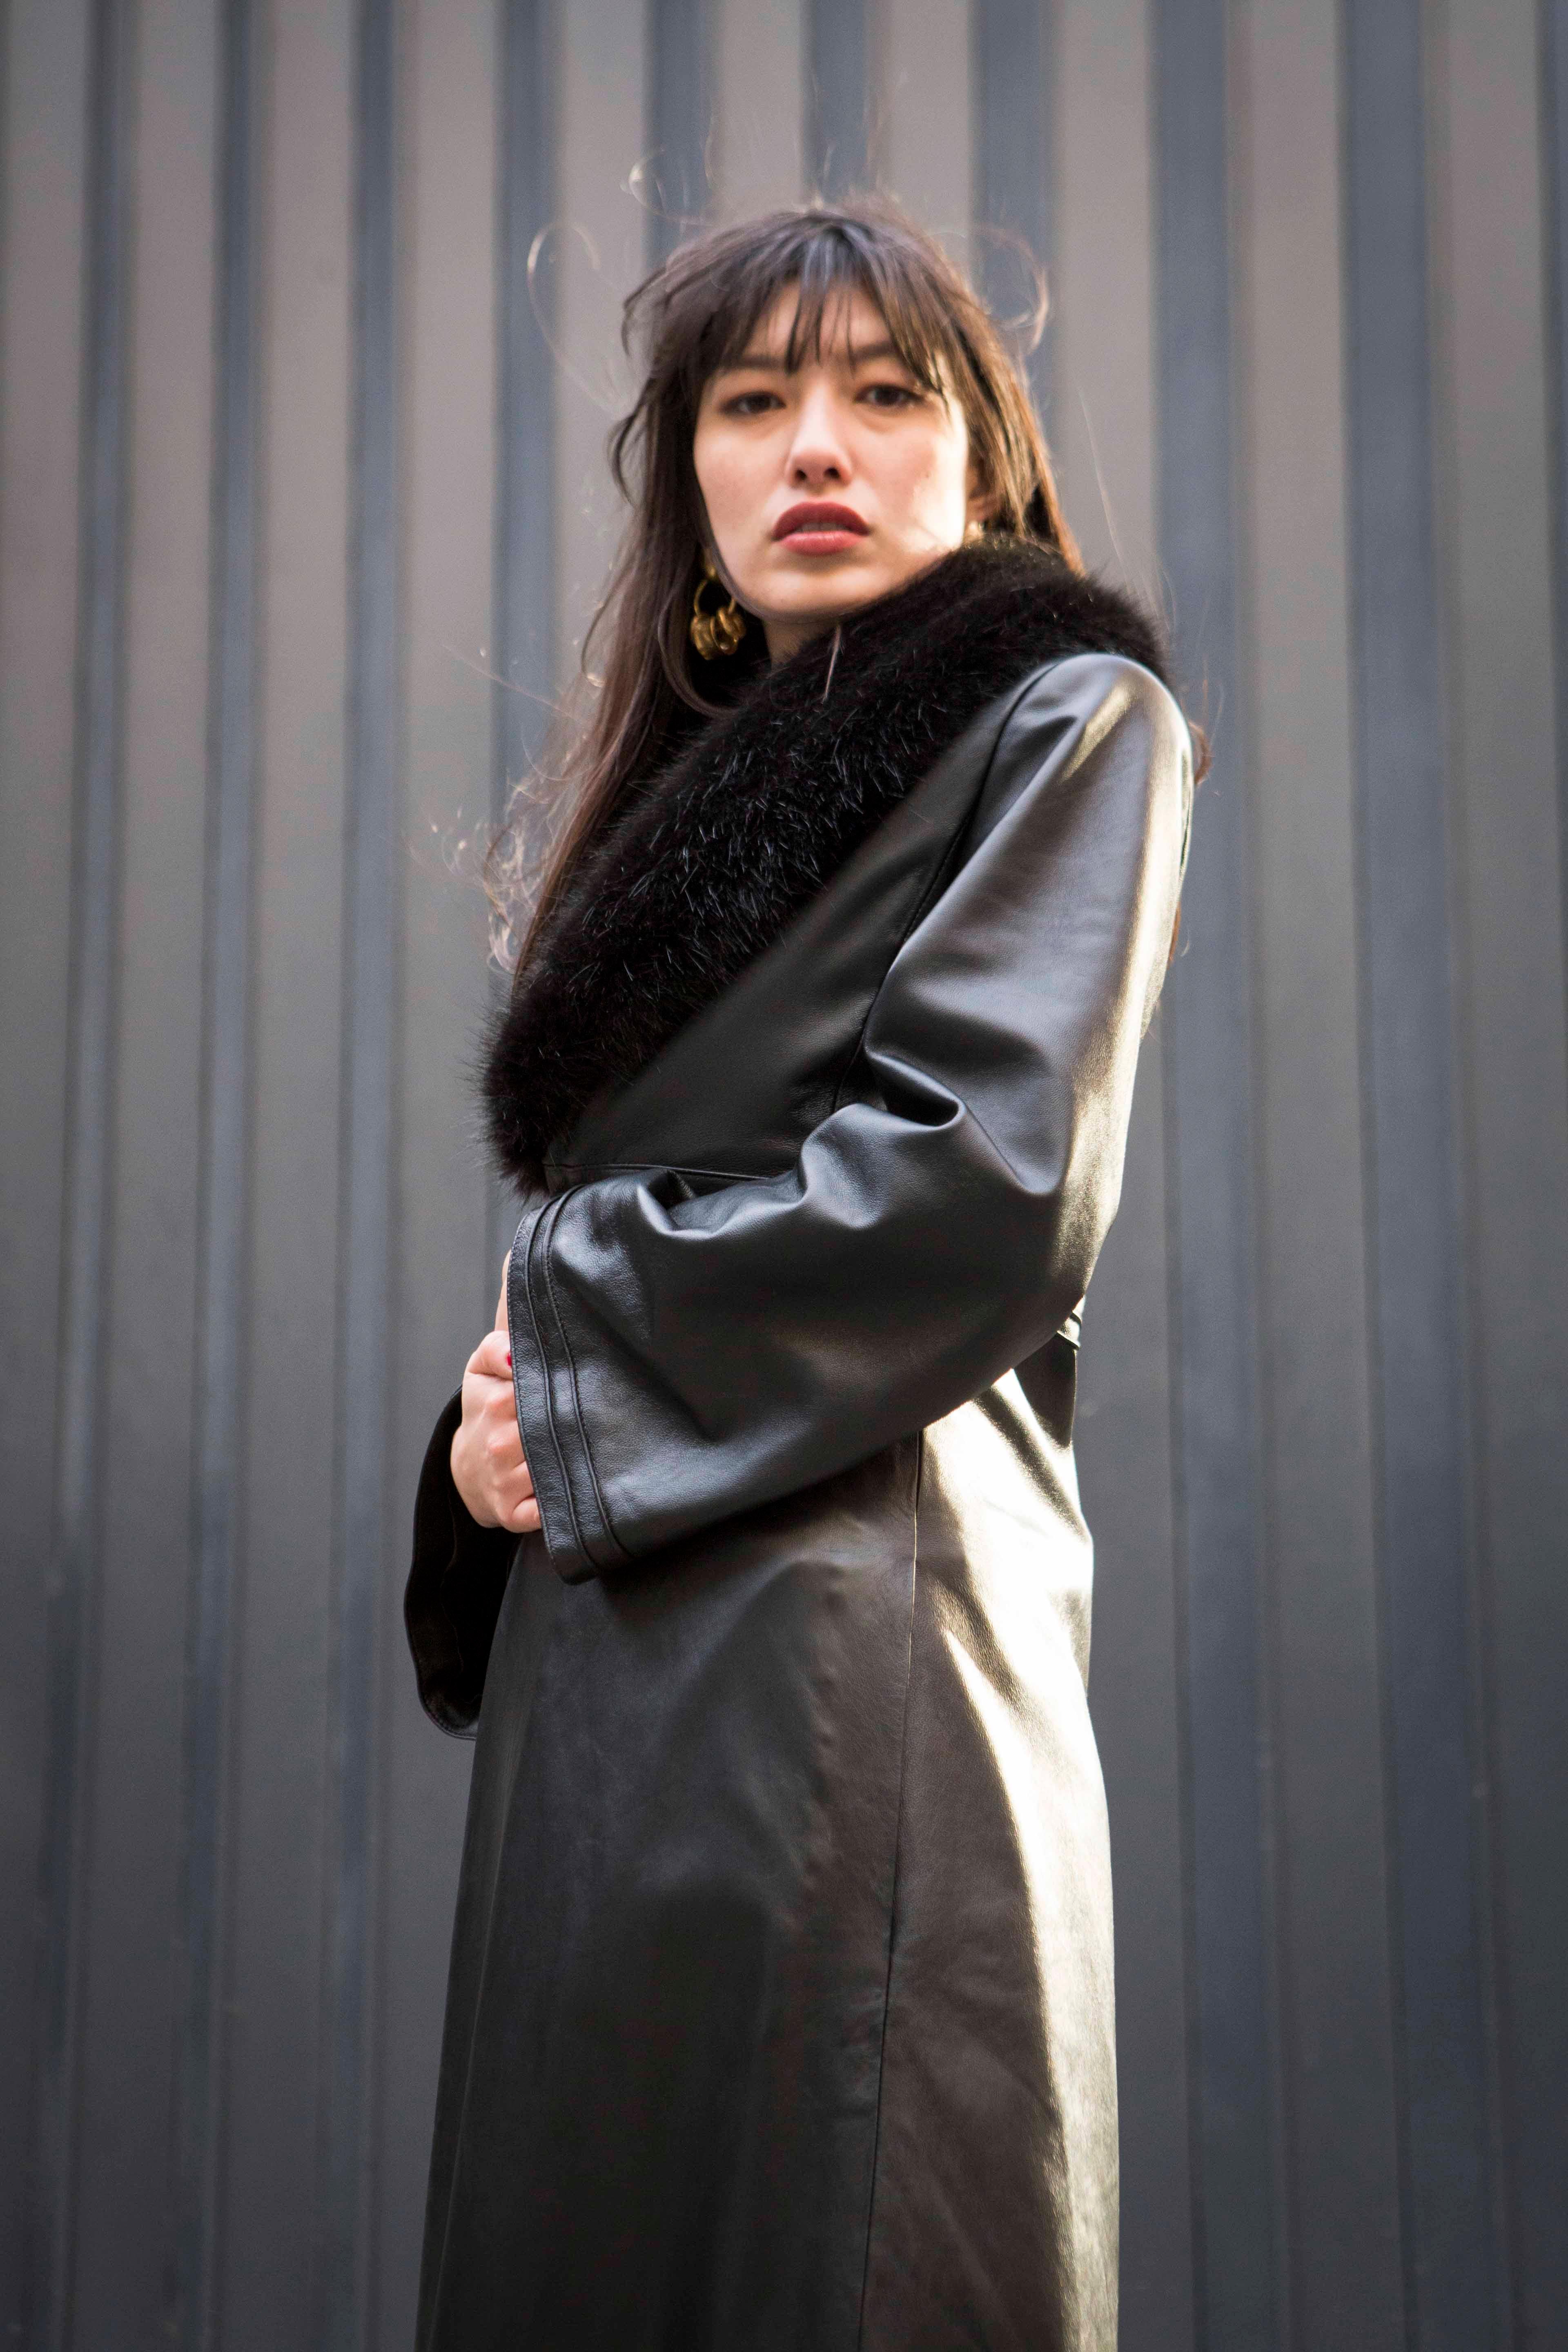 Women's Verheyen London Edward Leather Coat with Faux Fur Collar in Black - Size uk 10 For Sale